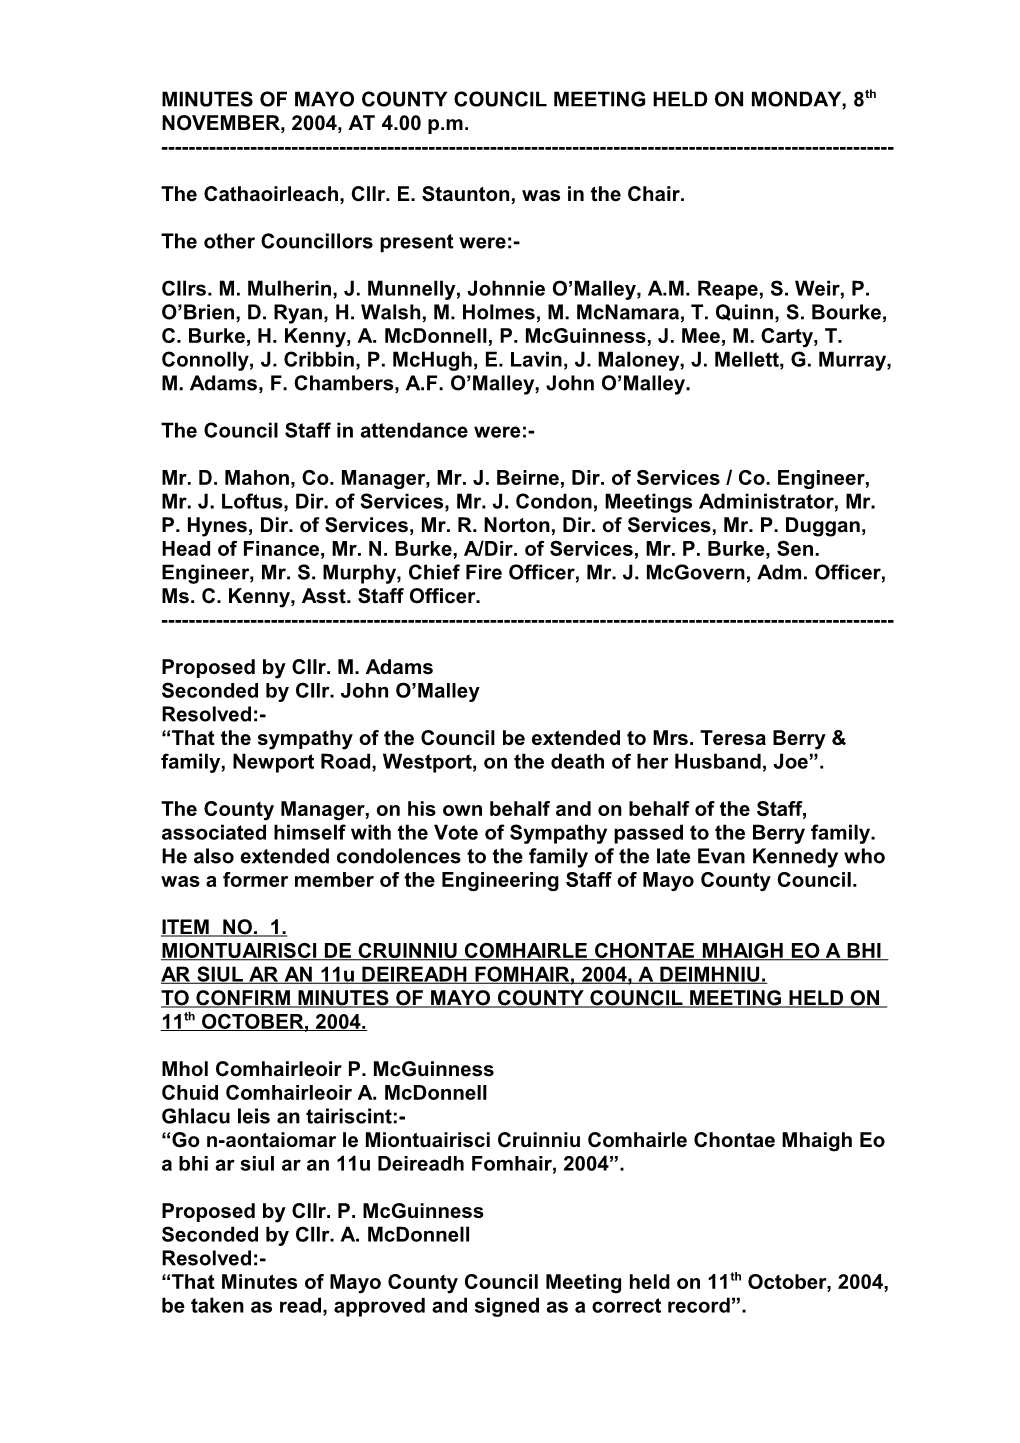 MINUTES of MAYO COUNTY COUNCIL MEETING HELD on MONDAY, 8Th NOVEMBER, 2004, at 4